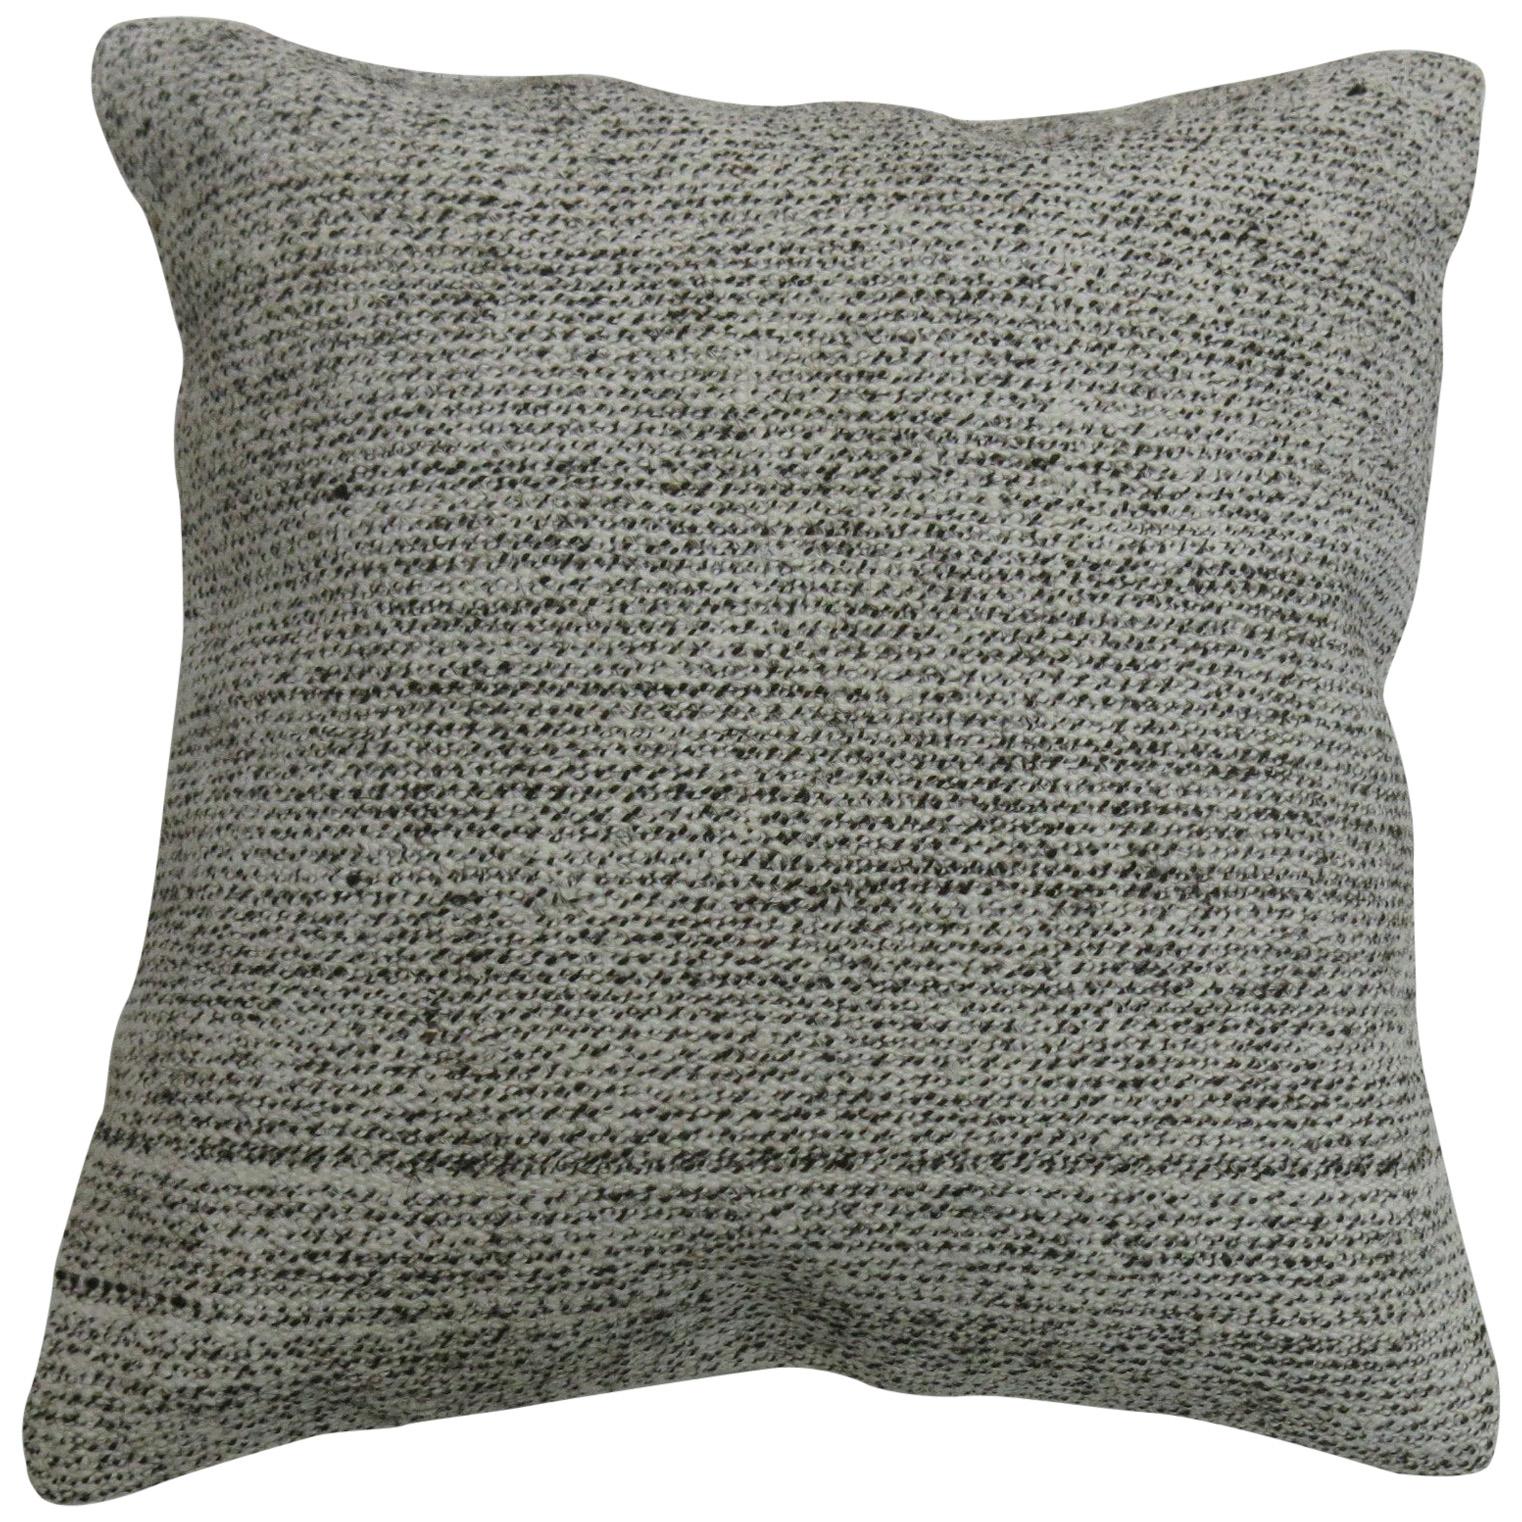 Gray Speckled Turkish Kilim Pillow